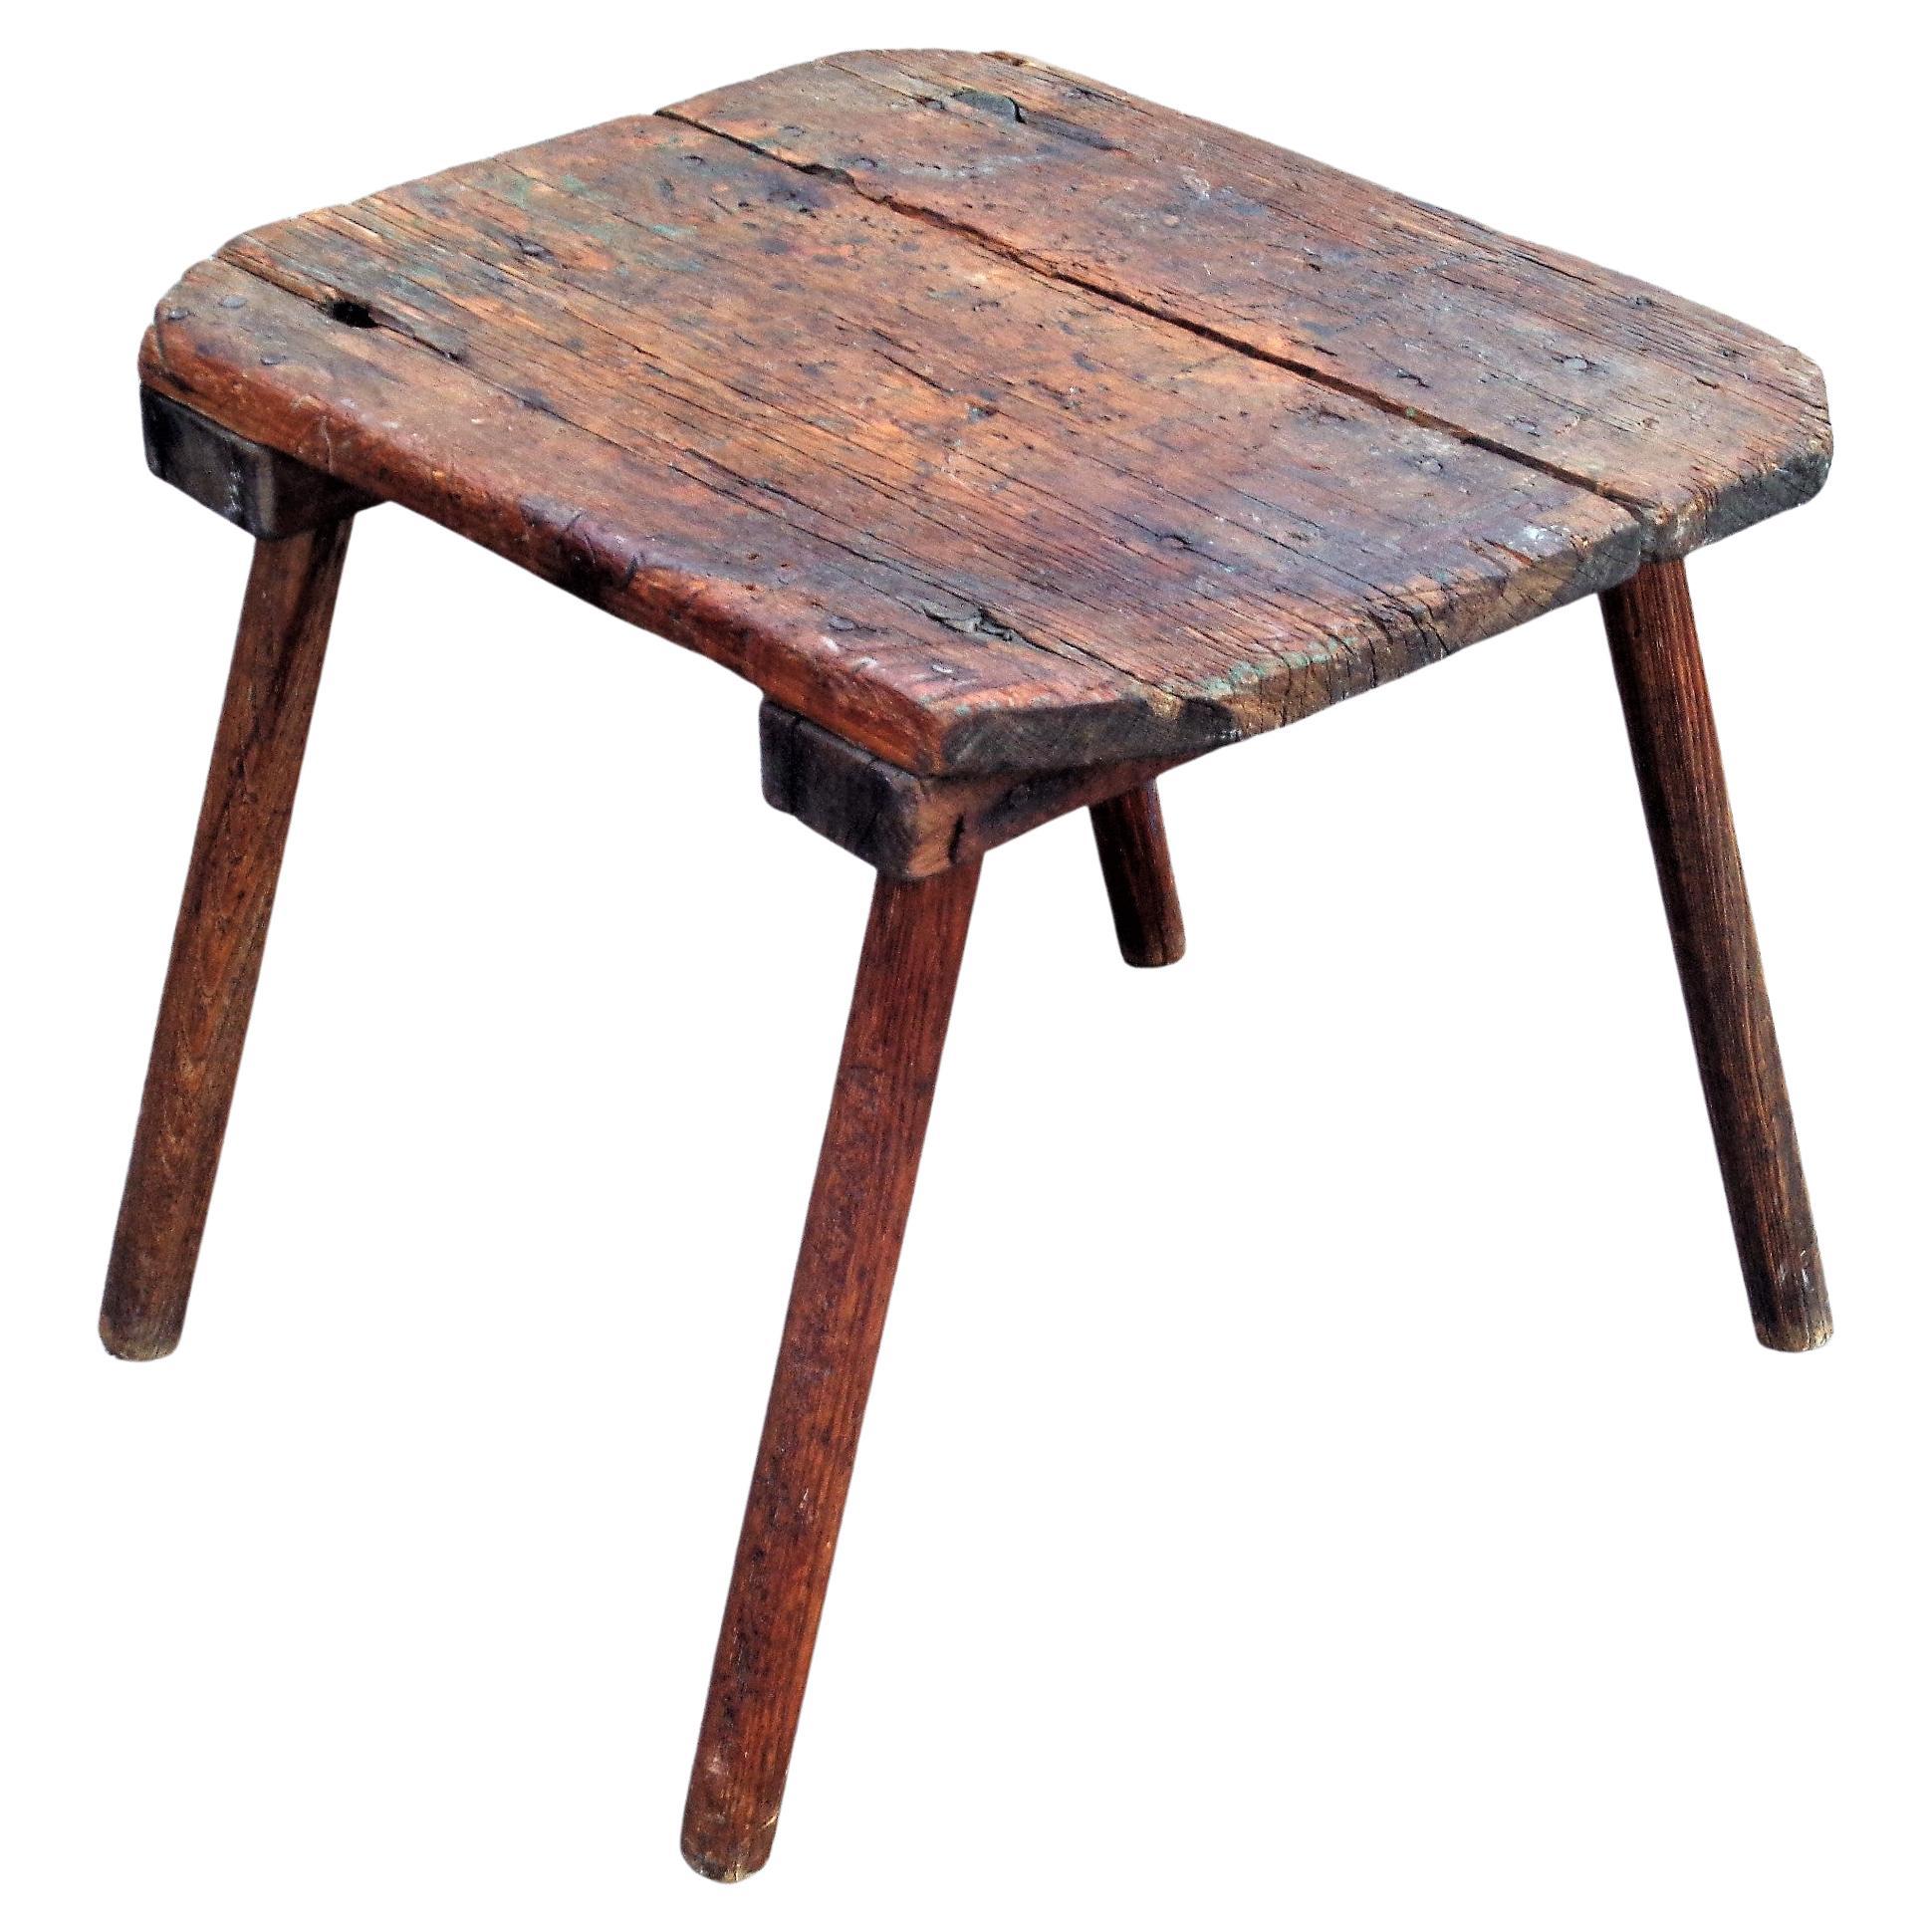 Antique American Primitive Table / Stool